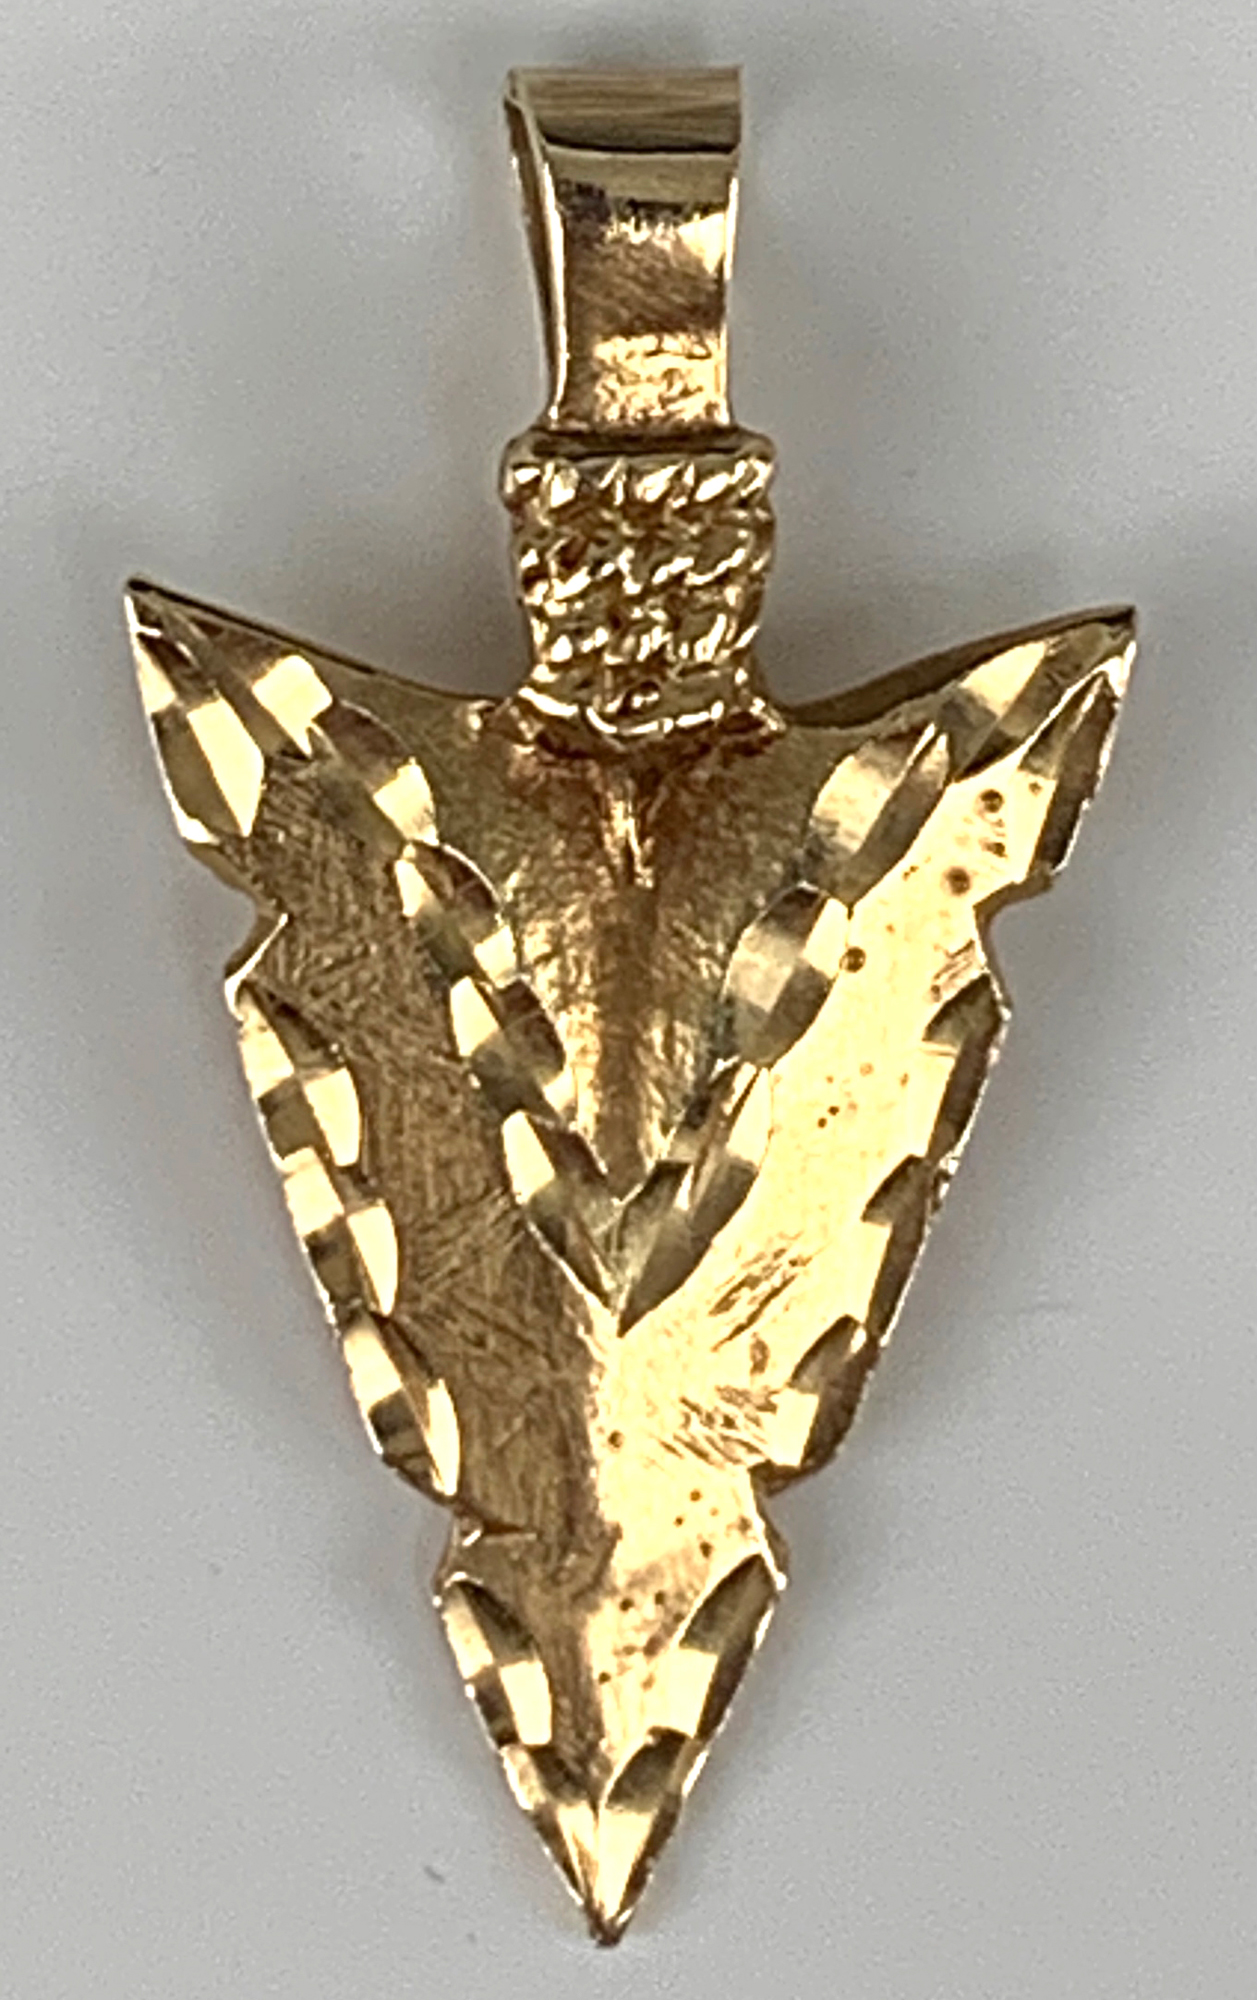 Pin on Beaded jewelry